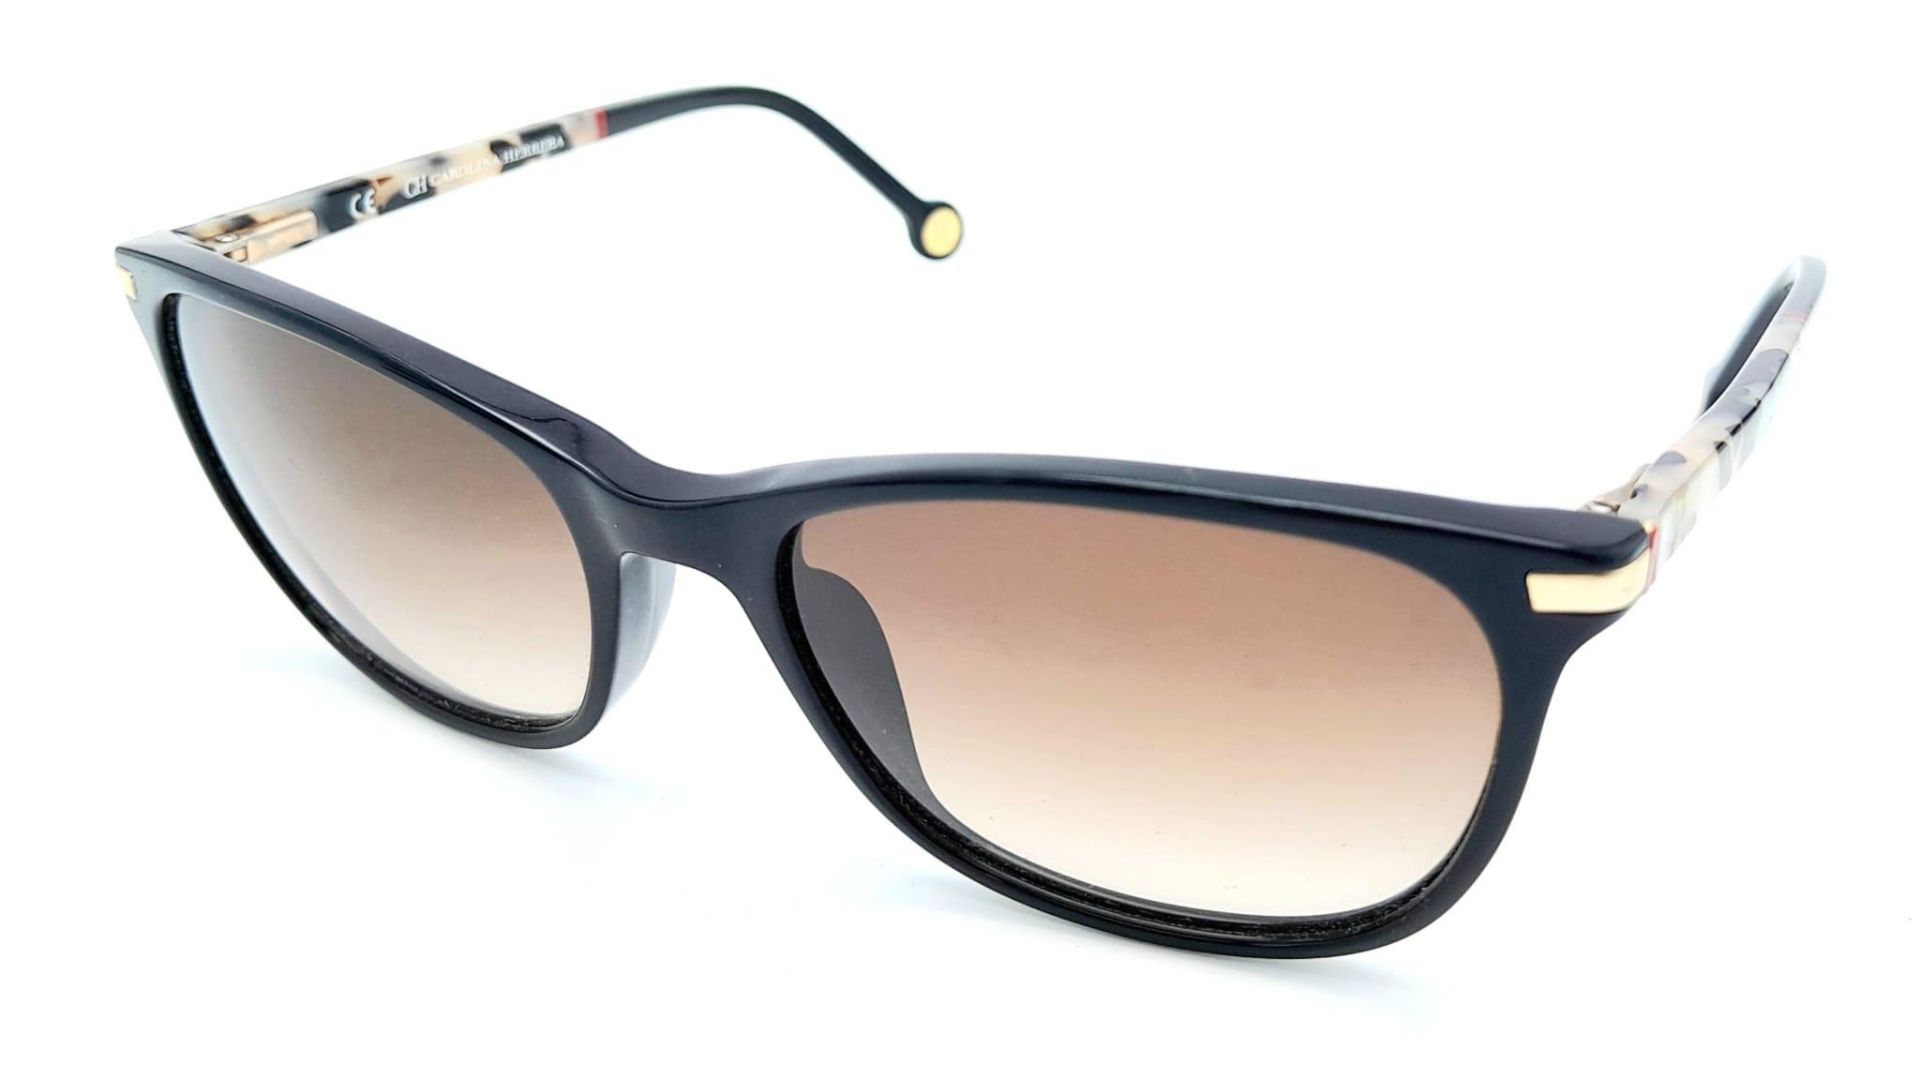 A Pair of Designer Carolina Herrera Sunglasses. Good condition.